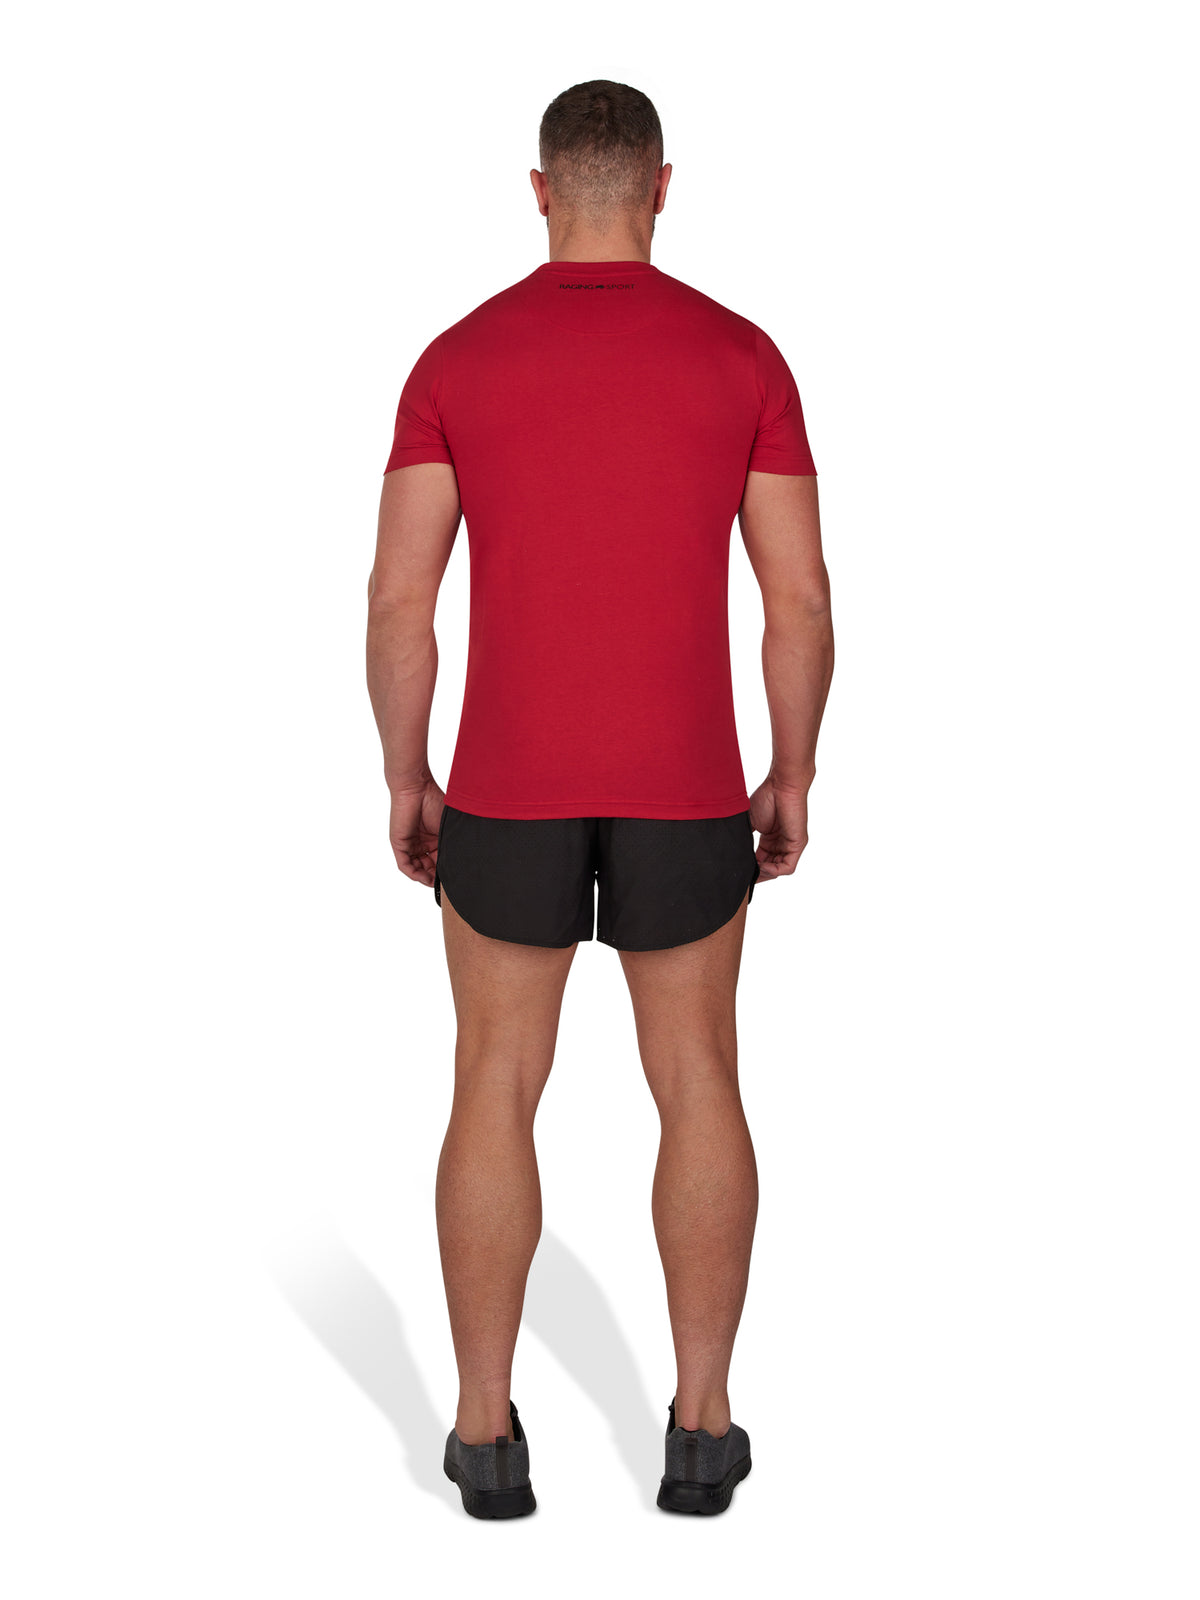 RB Sport No Limits T-Shirt - Red